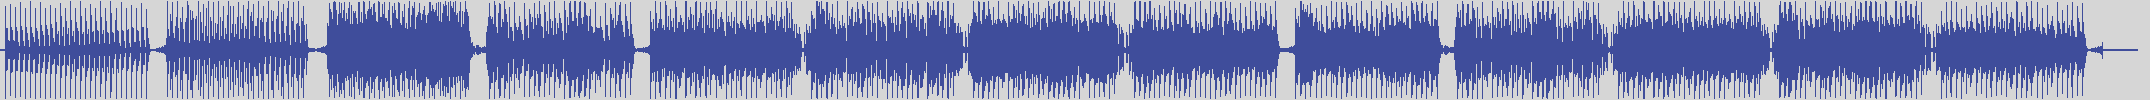 nf_boyz_records [NFY076] Deep Massive - No Place [Cubik 2 Deep Mix] audio wave form